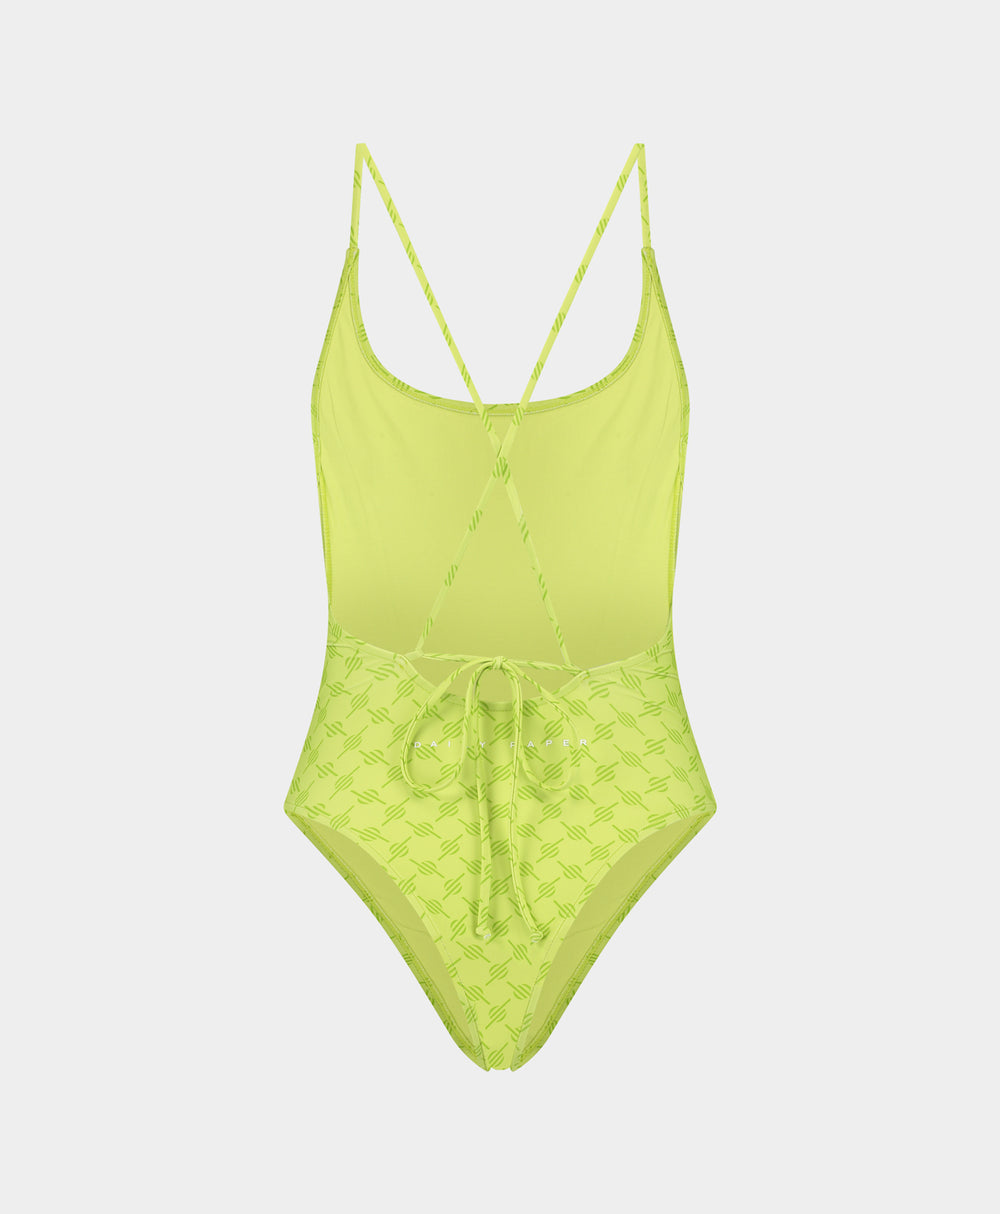 DP - Daiquiri Green Reya Monogram Swimsuit - Packshot - Rear